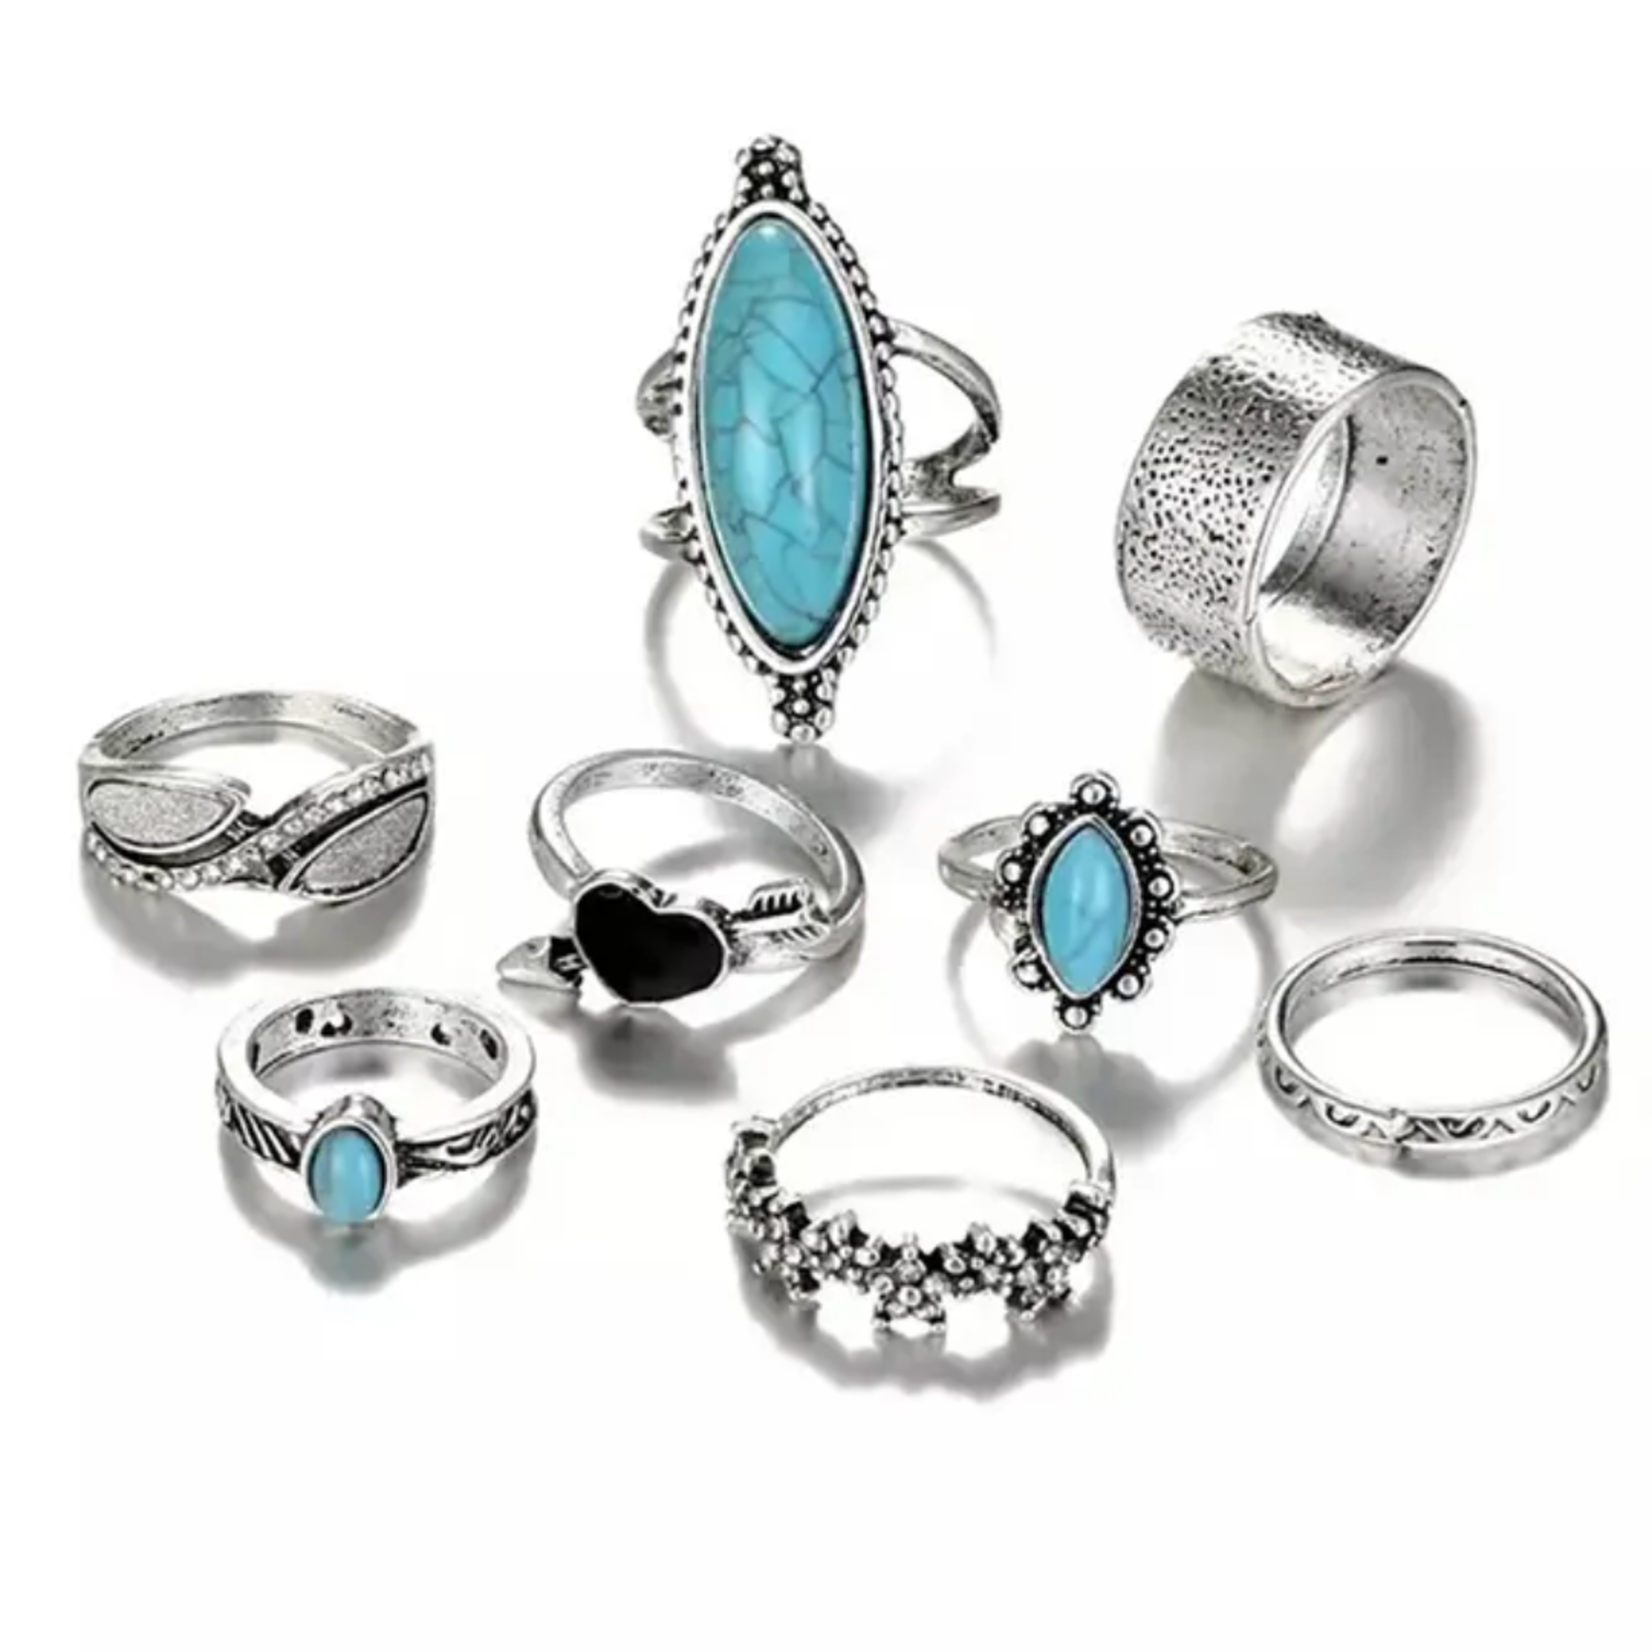 8 piece Turquoise Ring set